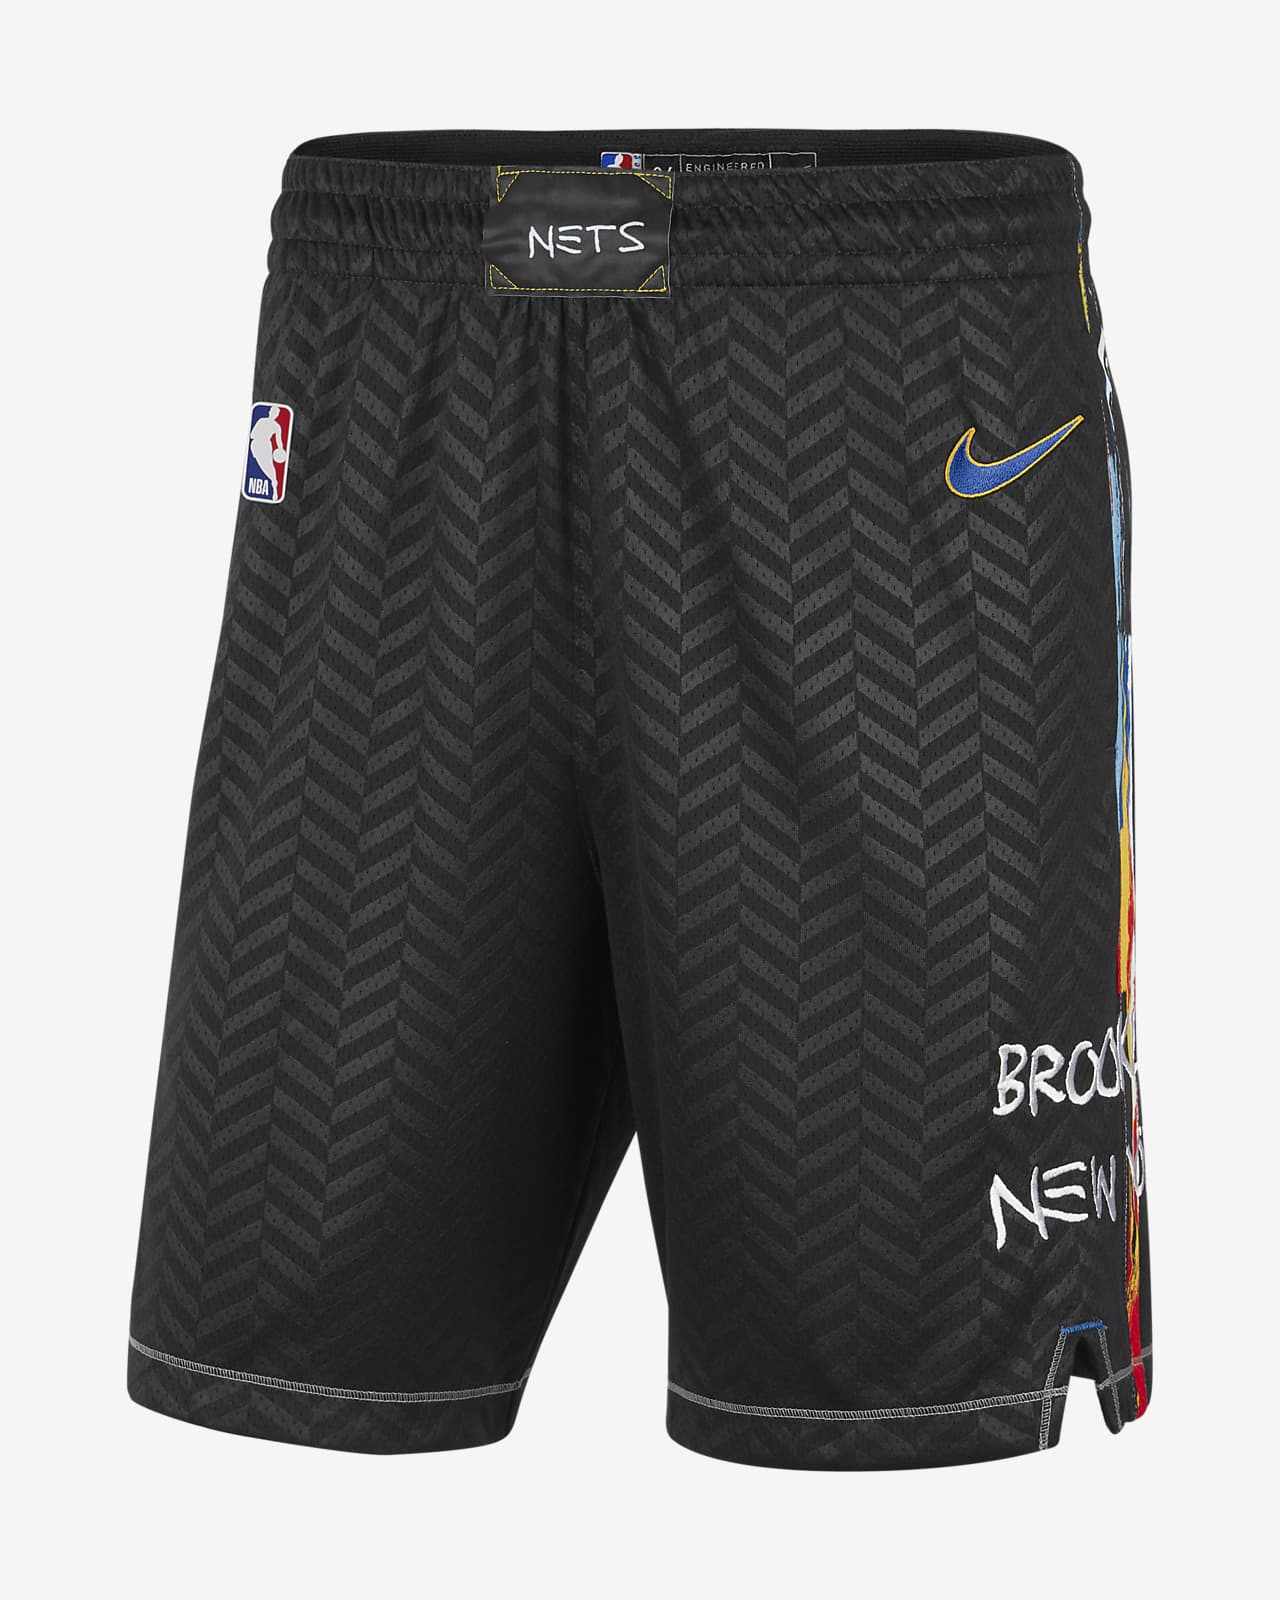 nets shorts nike